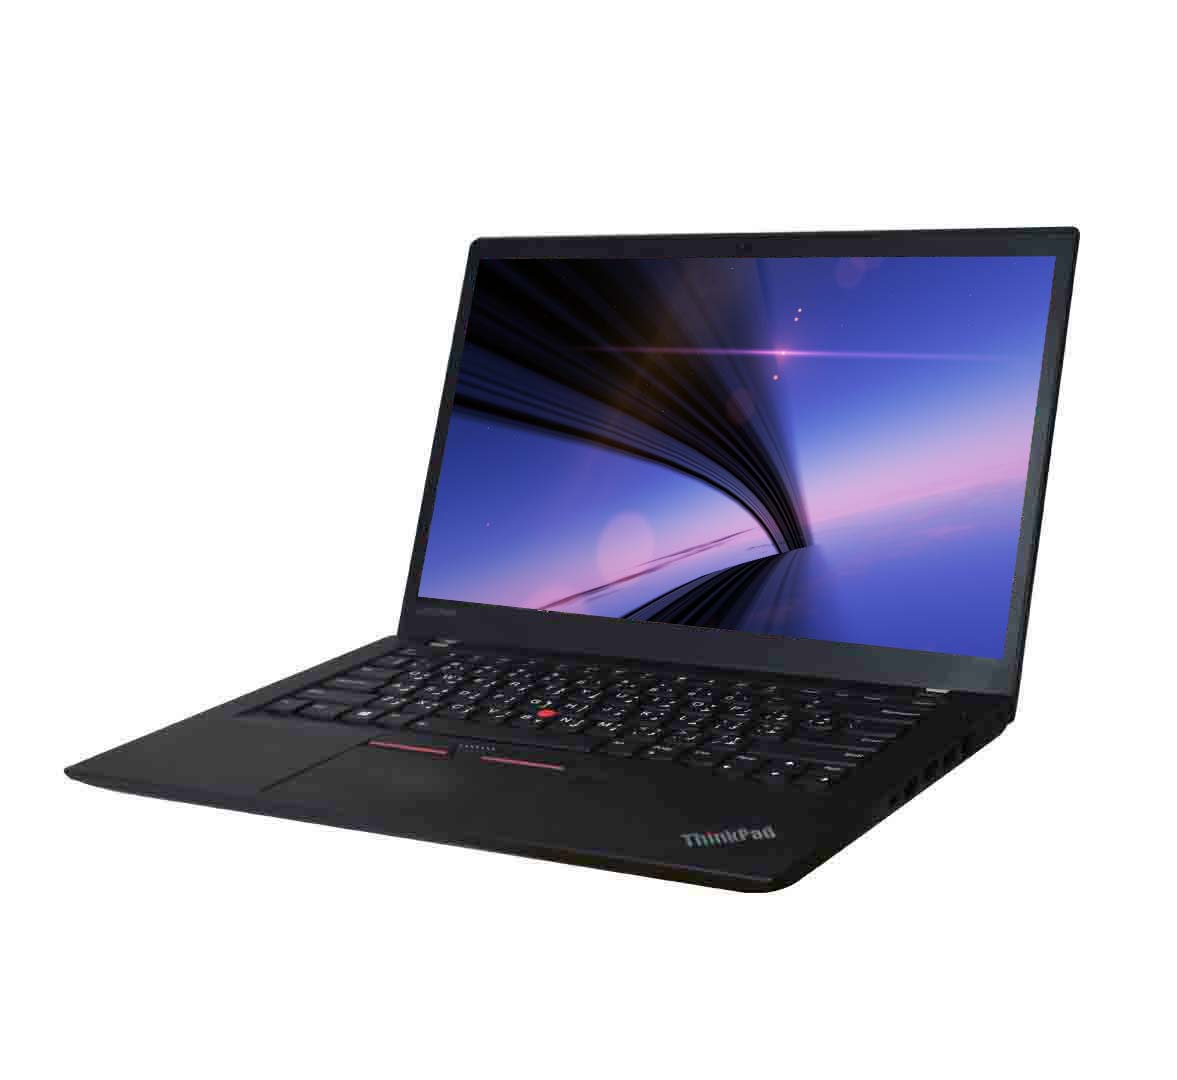 Lenovo ThinkPad T470 Business Laptop, Intel Core i5-6th Gen CPU, 20GB RAM, 256GB SSD, 14 inch Display, Windows 10 Pro, Refurbished Laptop